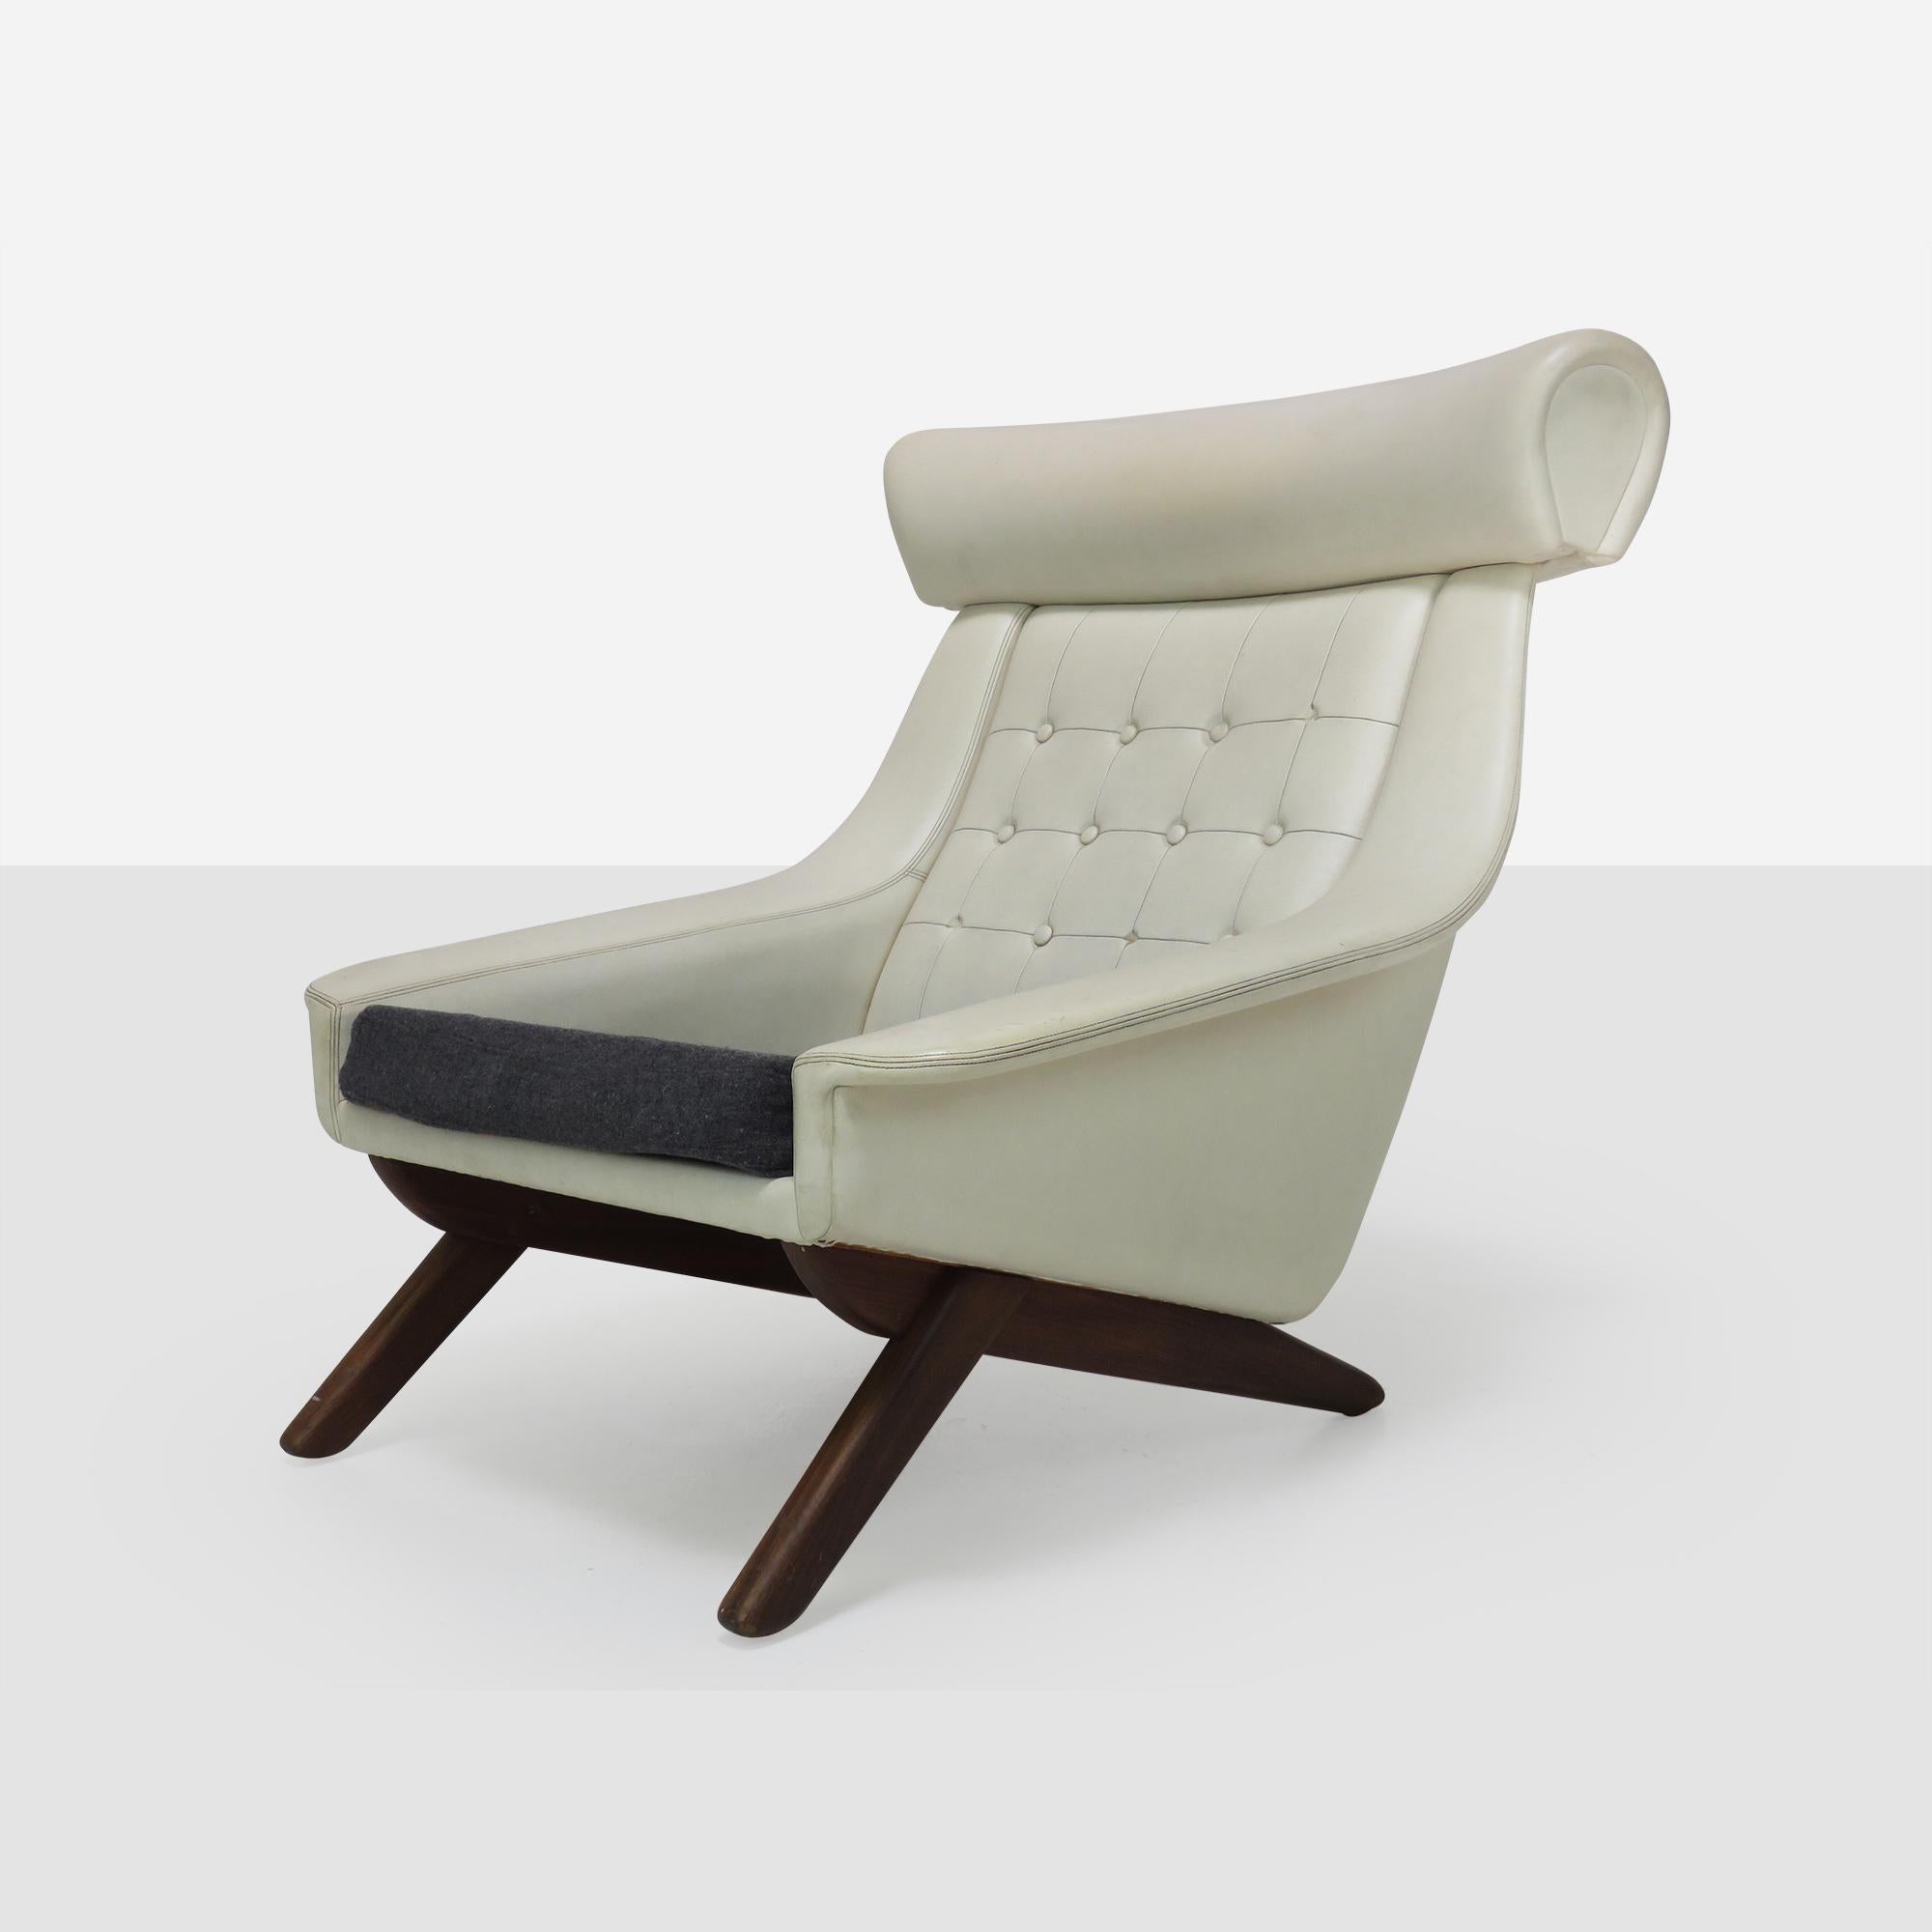 A Danish teak and vinyl 'Ox' lounge chair.

Measure: Seat depth 20